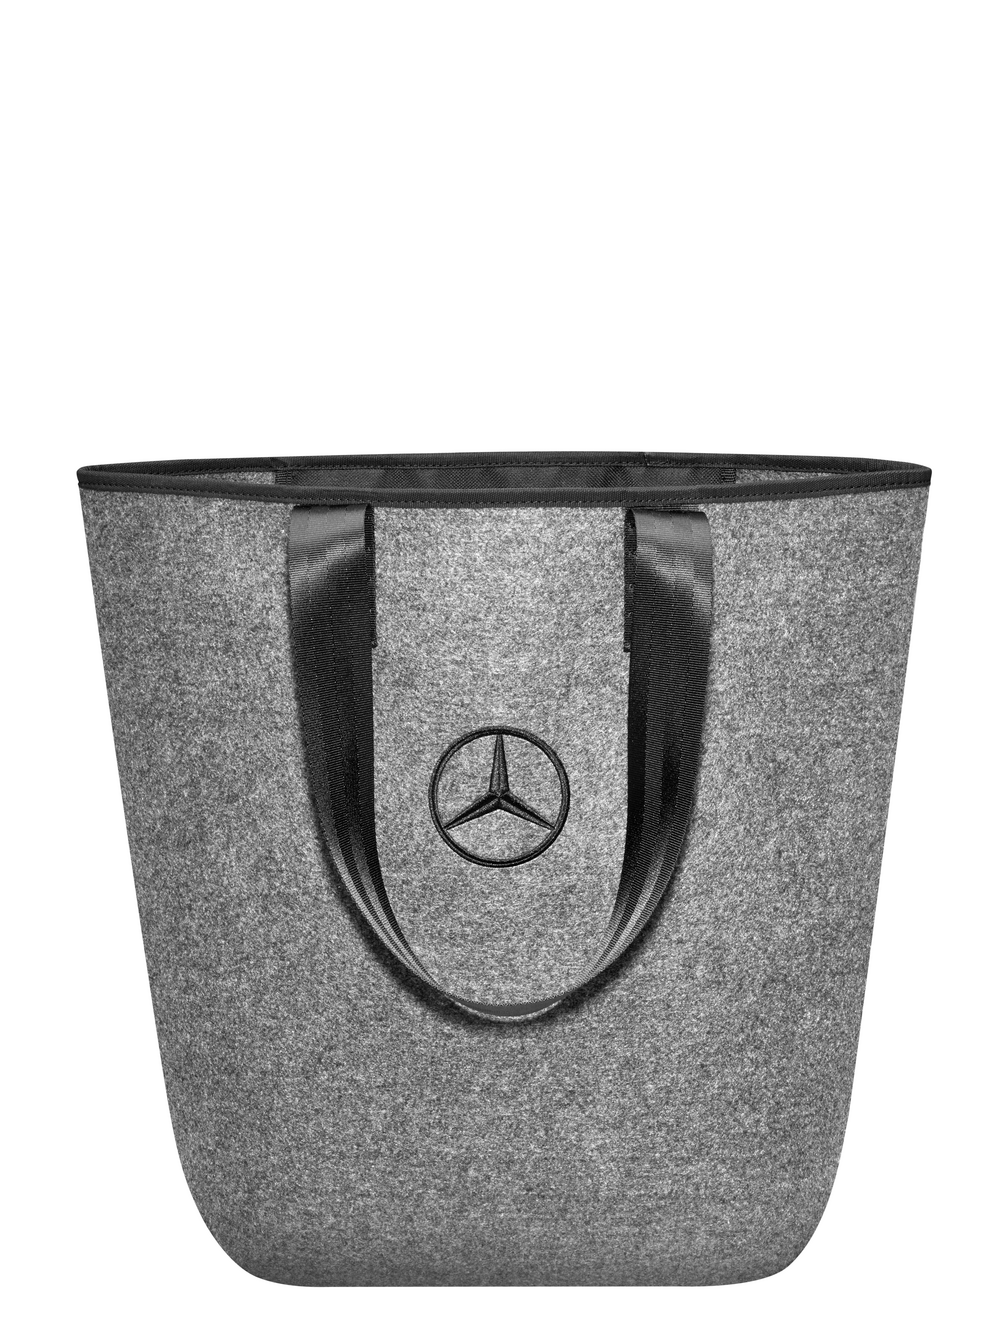 Mercedes Benz original dirigida por silla/compacta con bolso negro OVP 